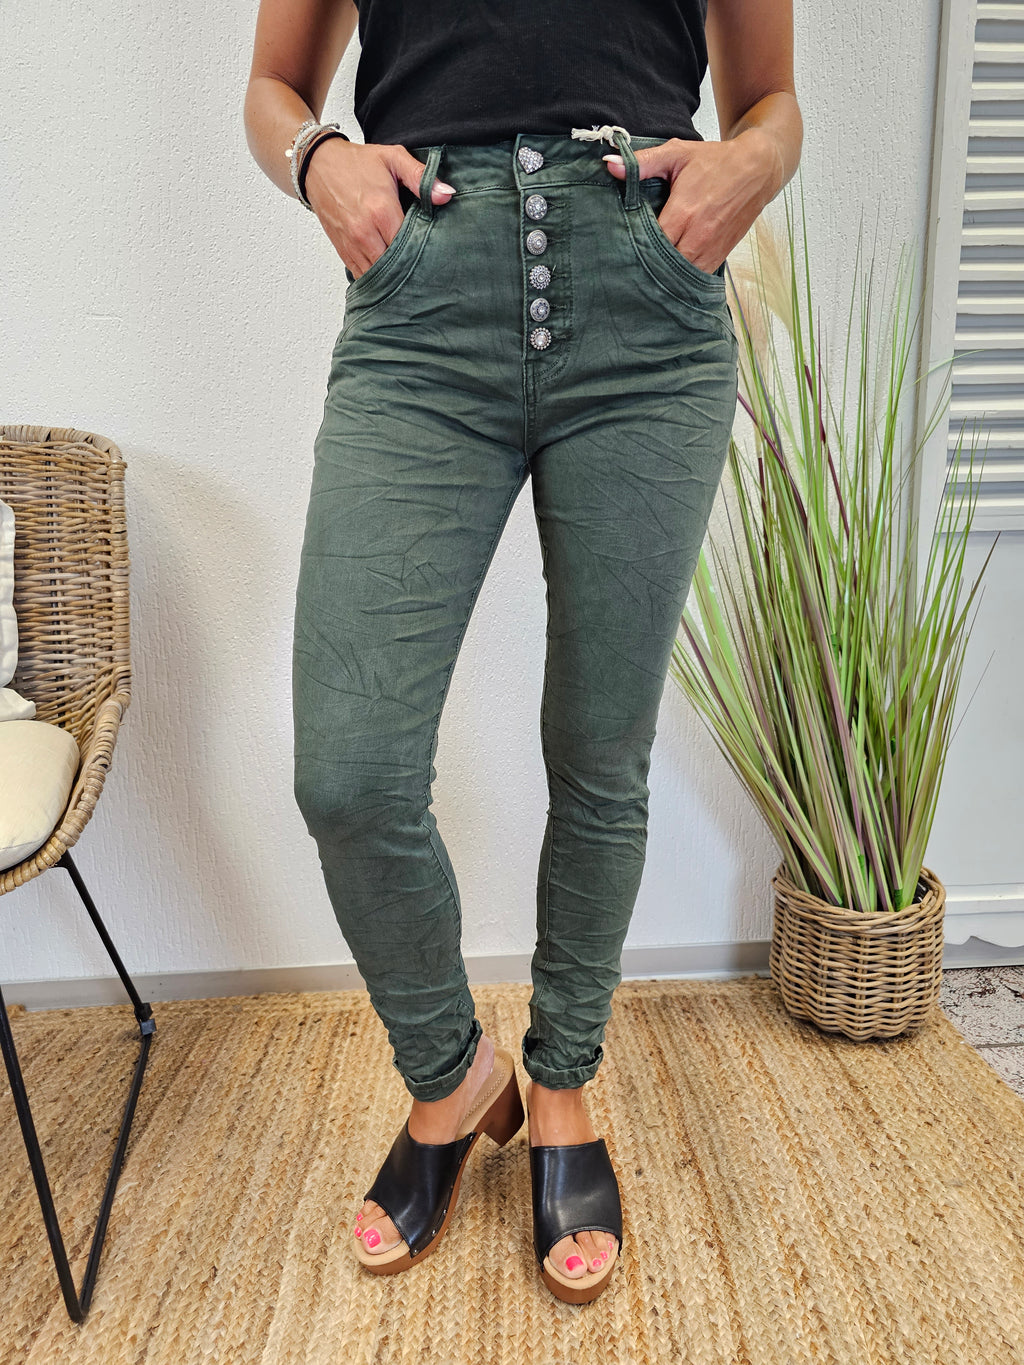 Jeans in Khaki Jewelly JW2565-4 mit Schmuck-Knopfleiste